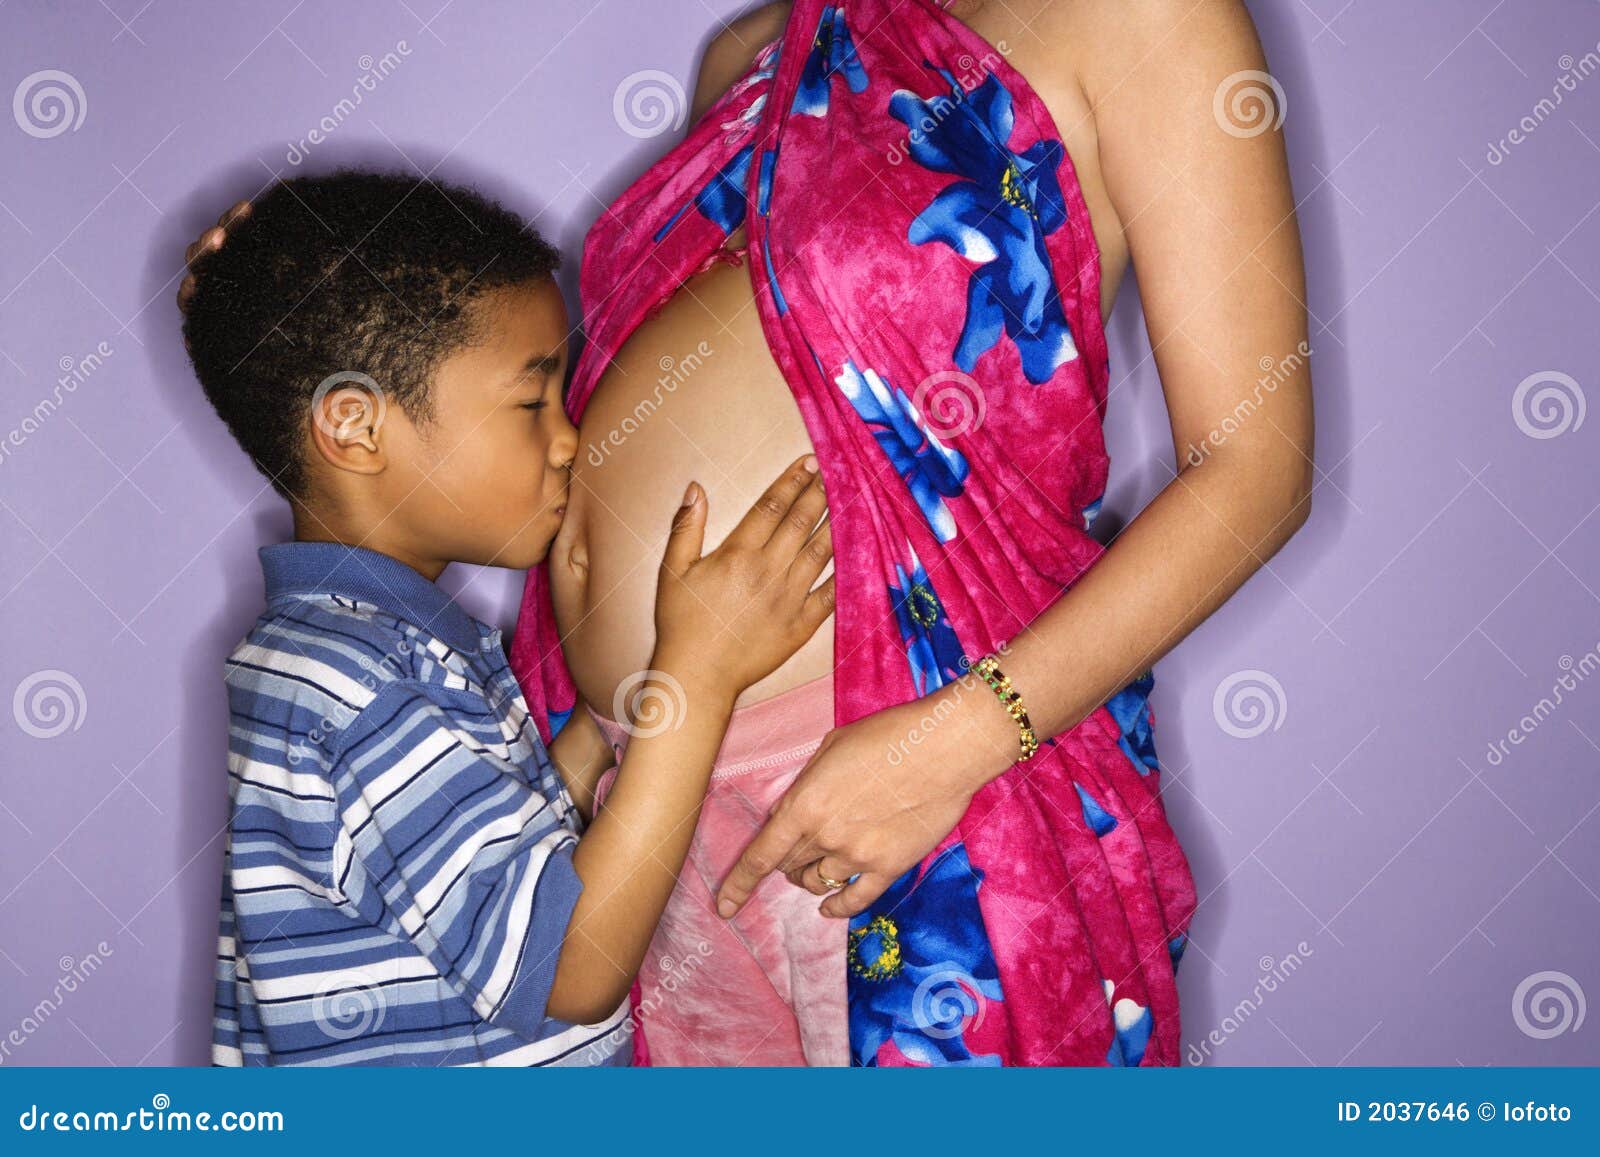 cam christman share son makes mom pregnant photos